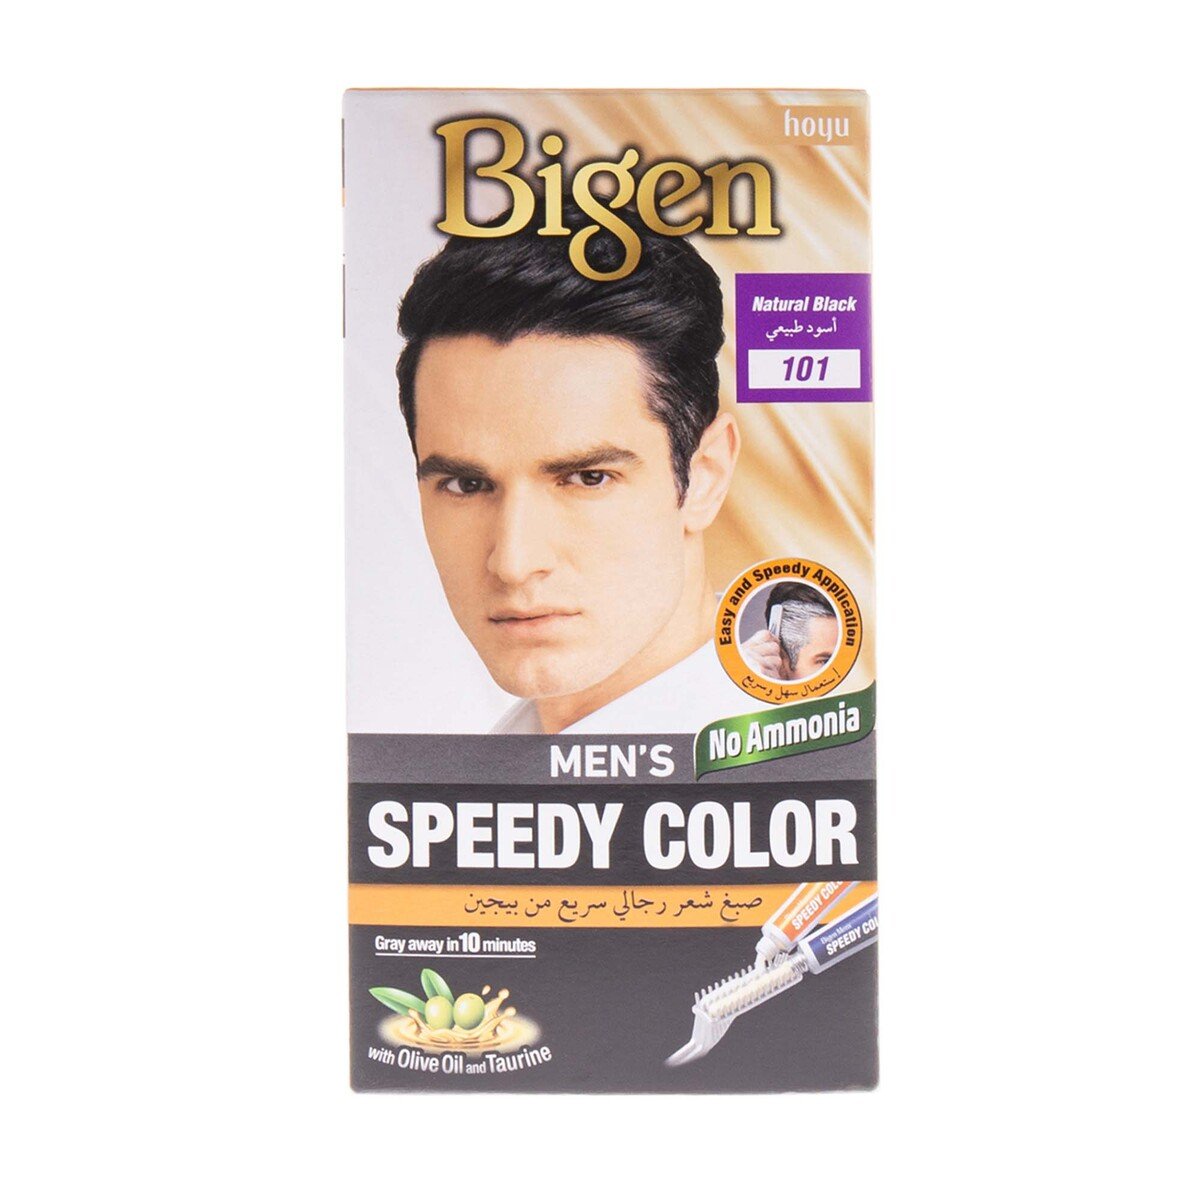 Bigen Men's Speedy Color Natural Black 101 1 pkt